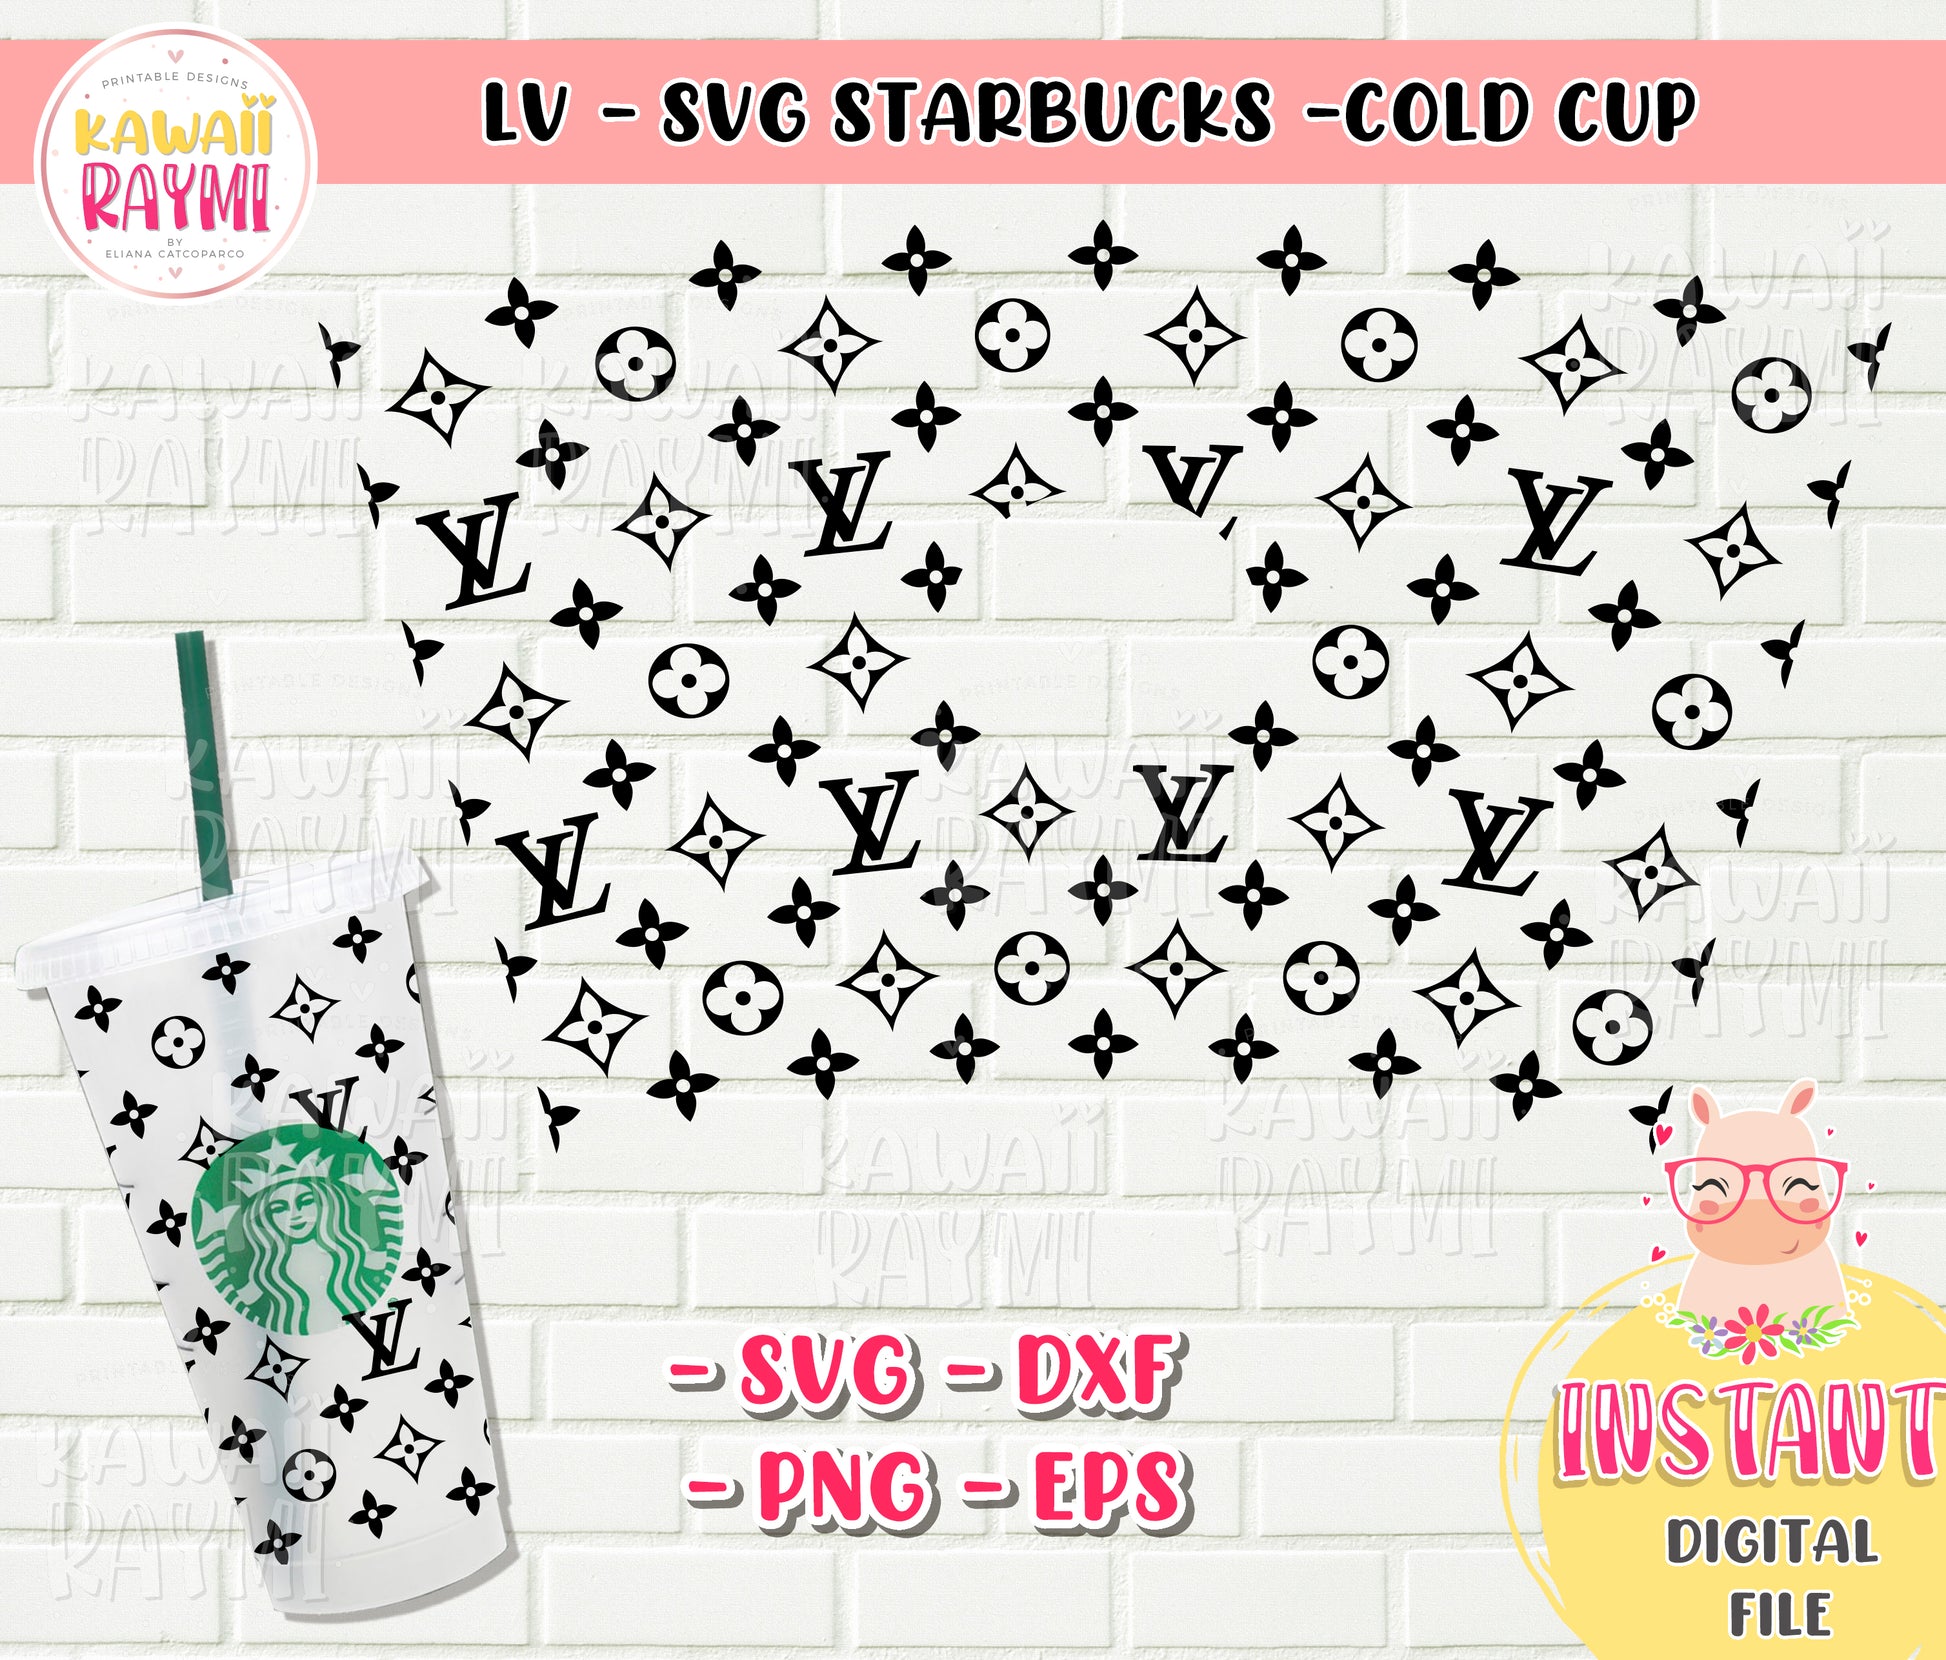 Mushroom Starbucks Wrap svg, Starbucks cold cup SVG, Layered SVG, Starbucks  cricut, 24 OZ Starbucks Wrap